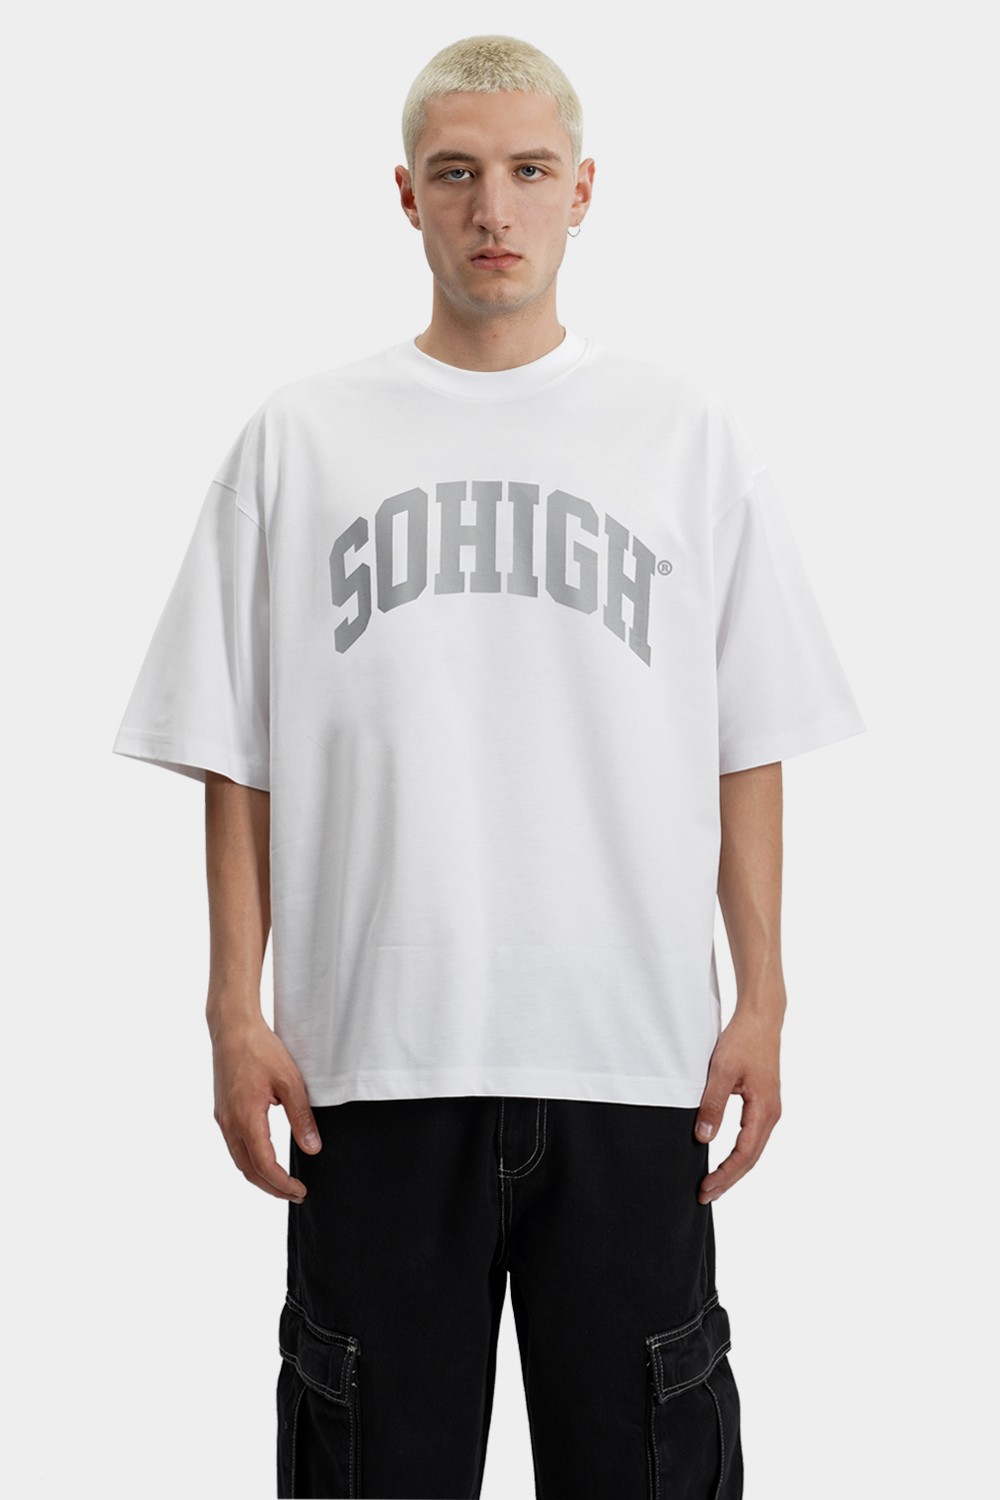 Sohigh College Logo T-Shirt (SHT-12)